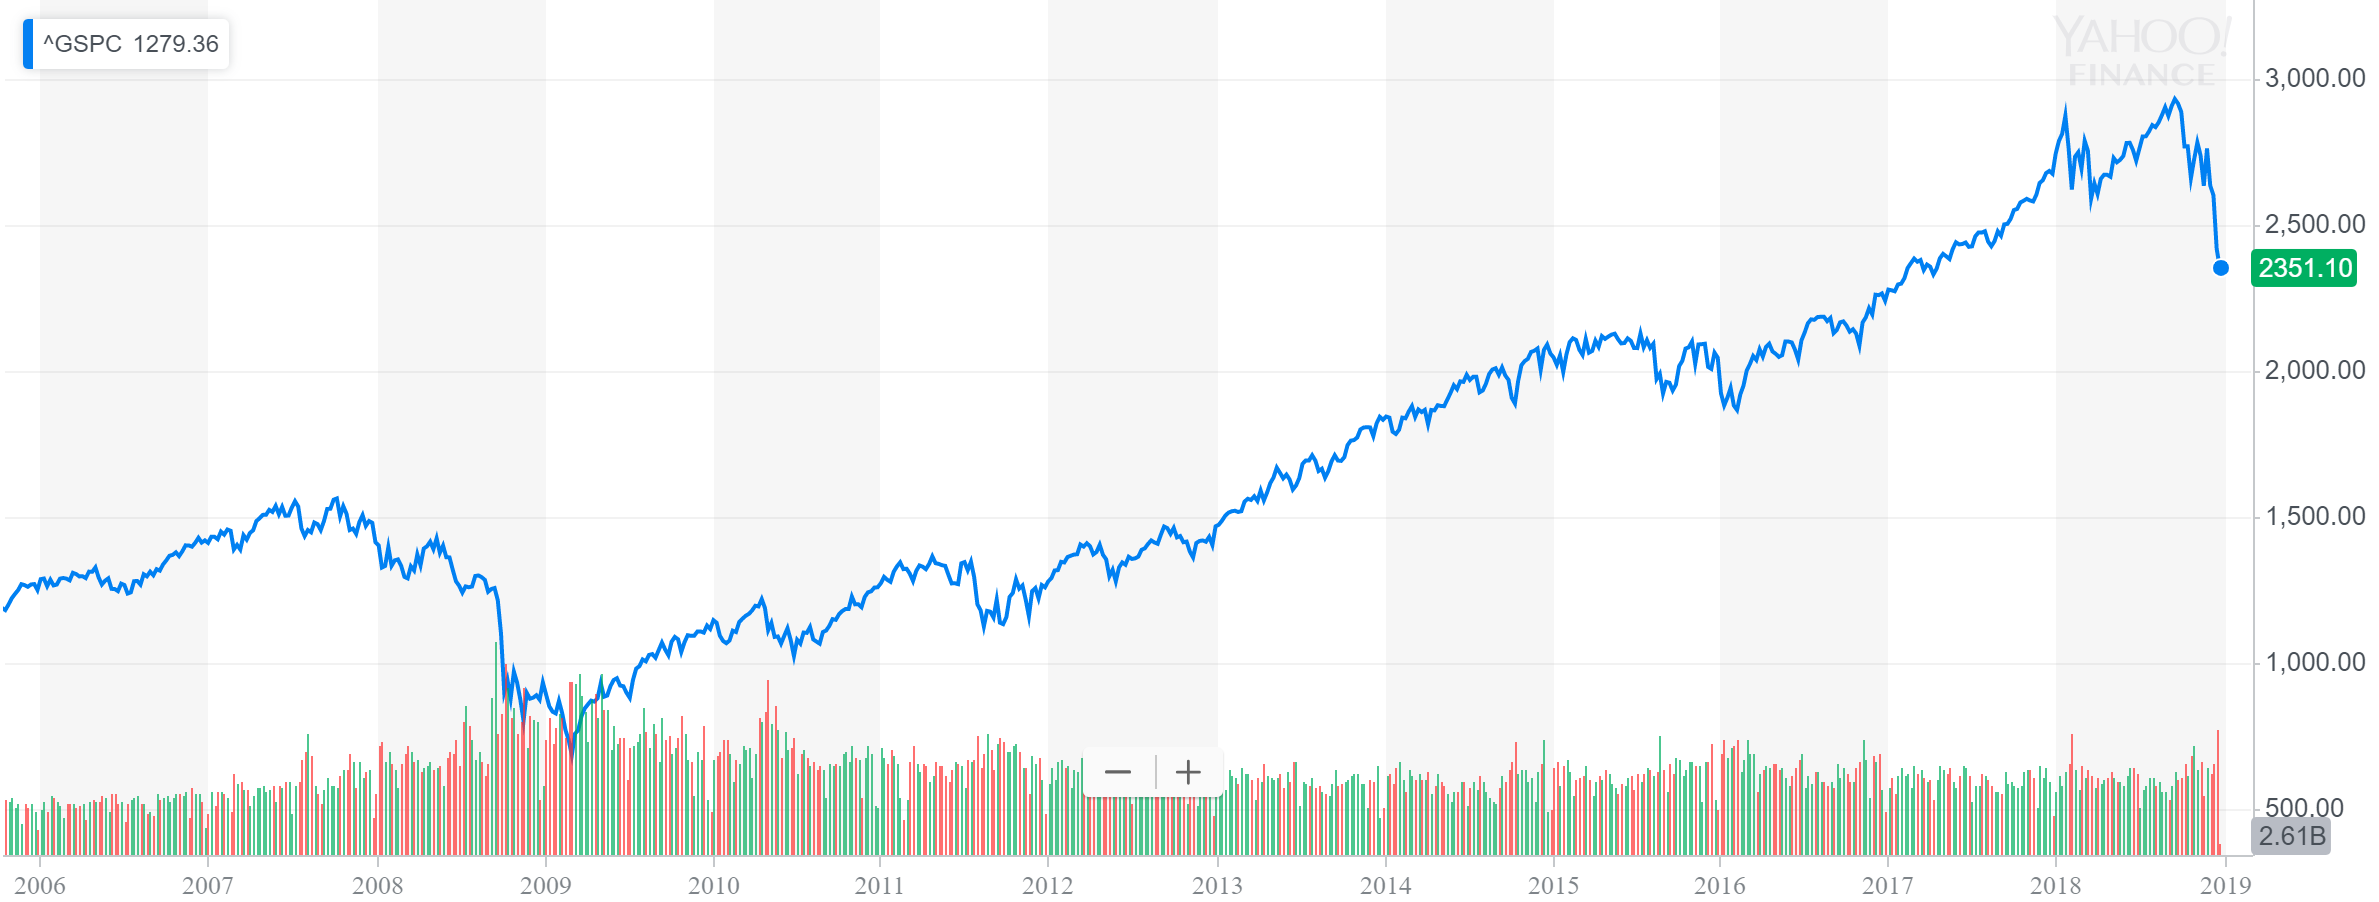 Stocks performance 2006-2018